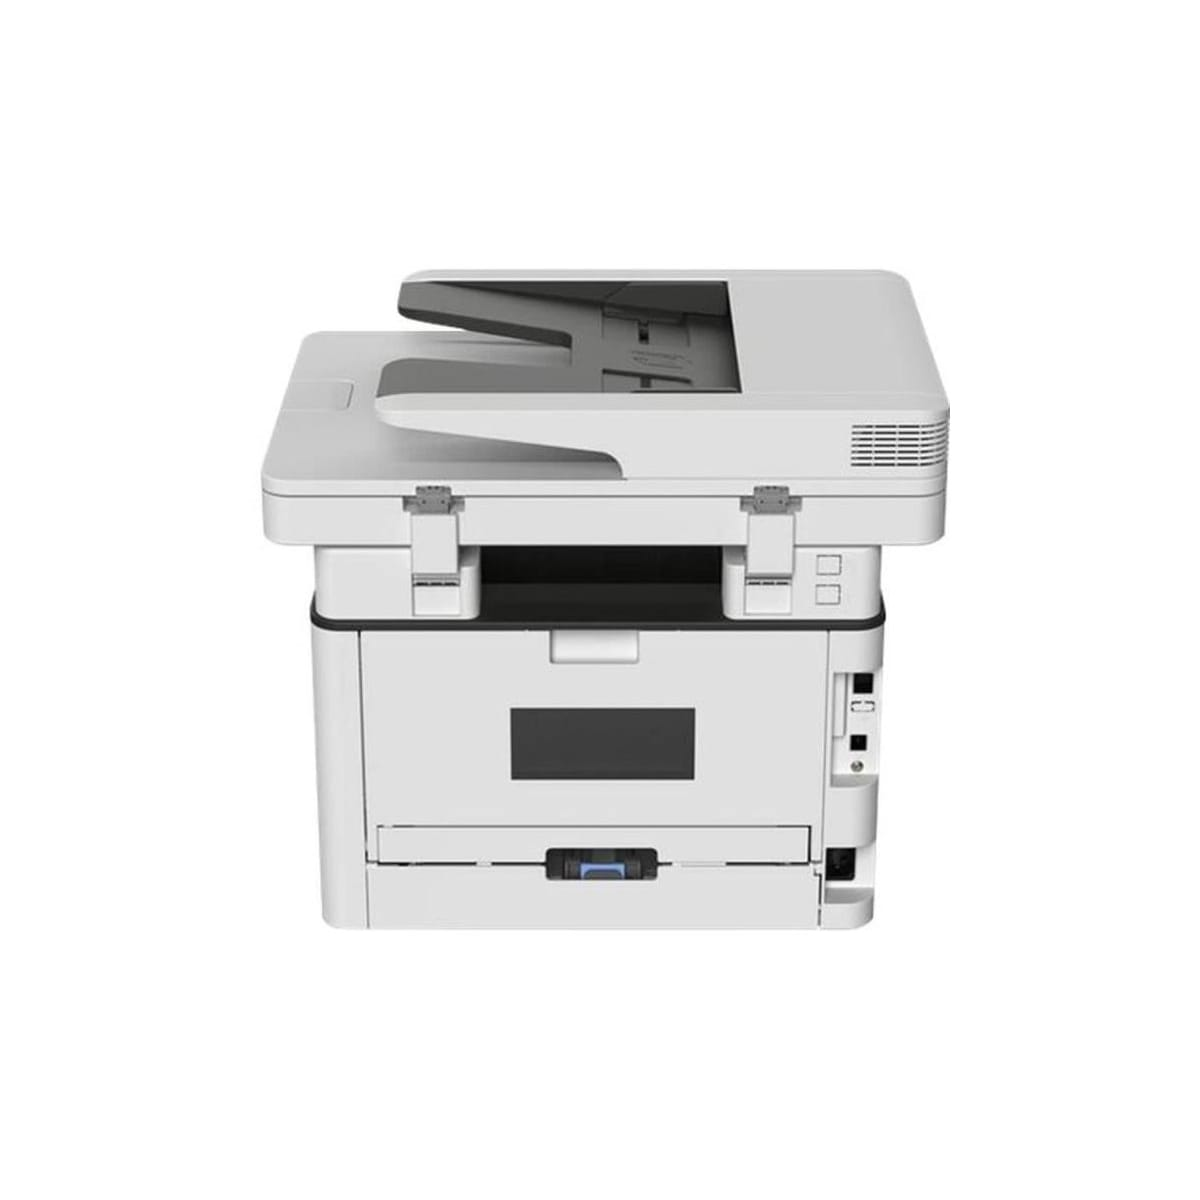 s/w 4-in-1, MB2236i Kopierer, und LEXMARK Scanner, ADF, (A4, Laser-Multifunktionsdrucker Multifunktionsgeräte Drucker Laser Cloud-Fax, Drucker,